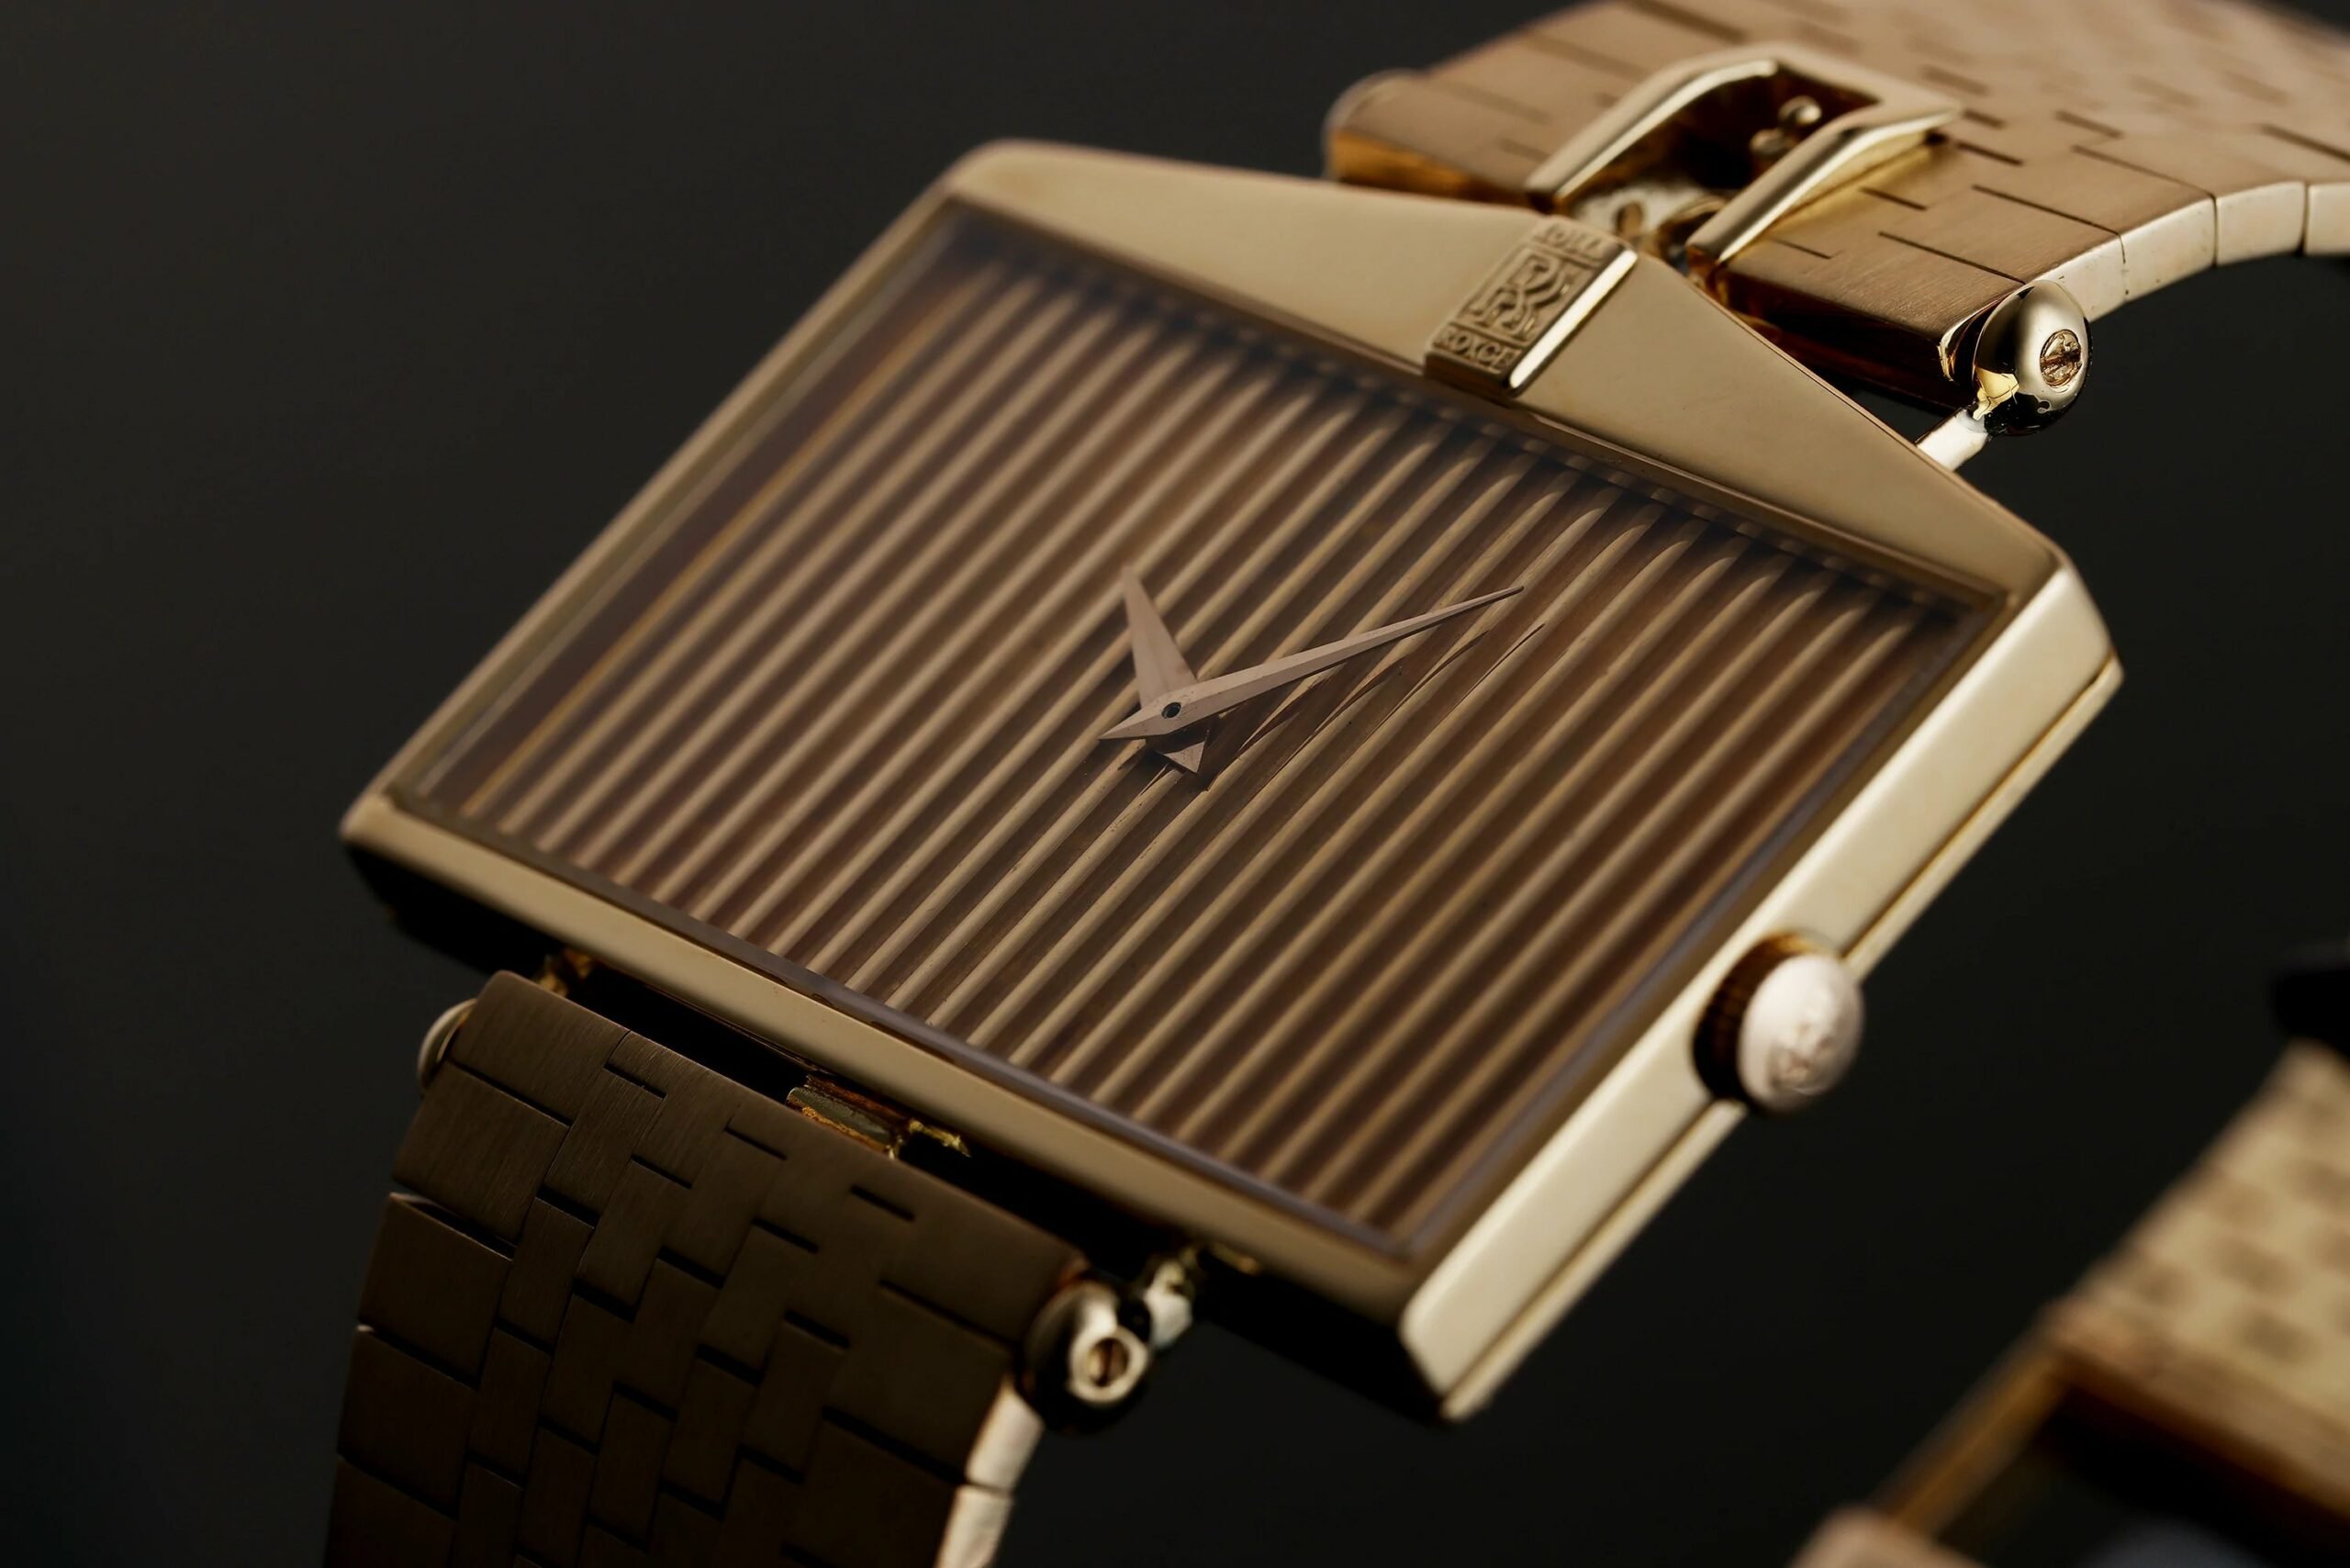 Louis Vuitton - Bracelet Keep It Twice - Taille 17 - - Catawiki